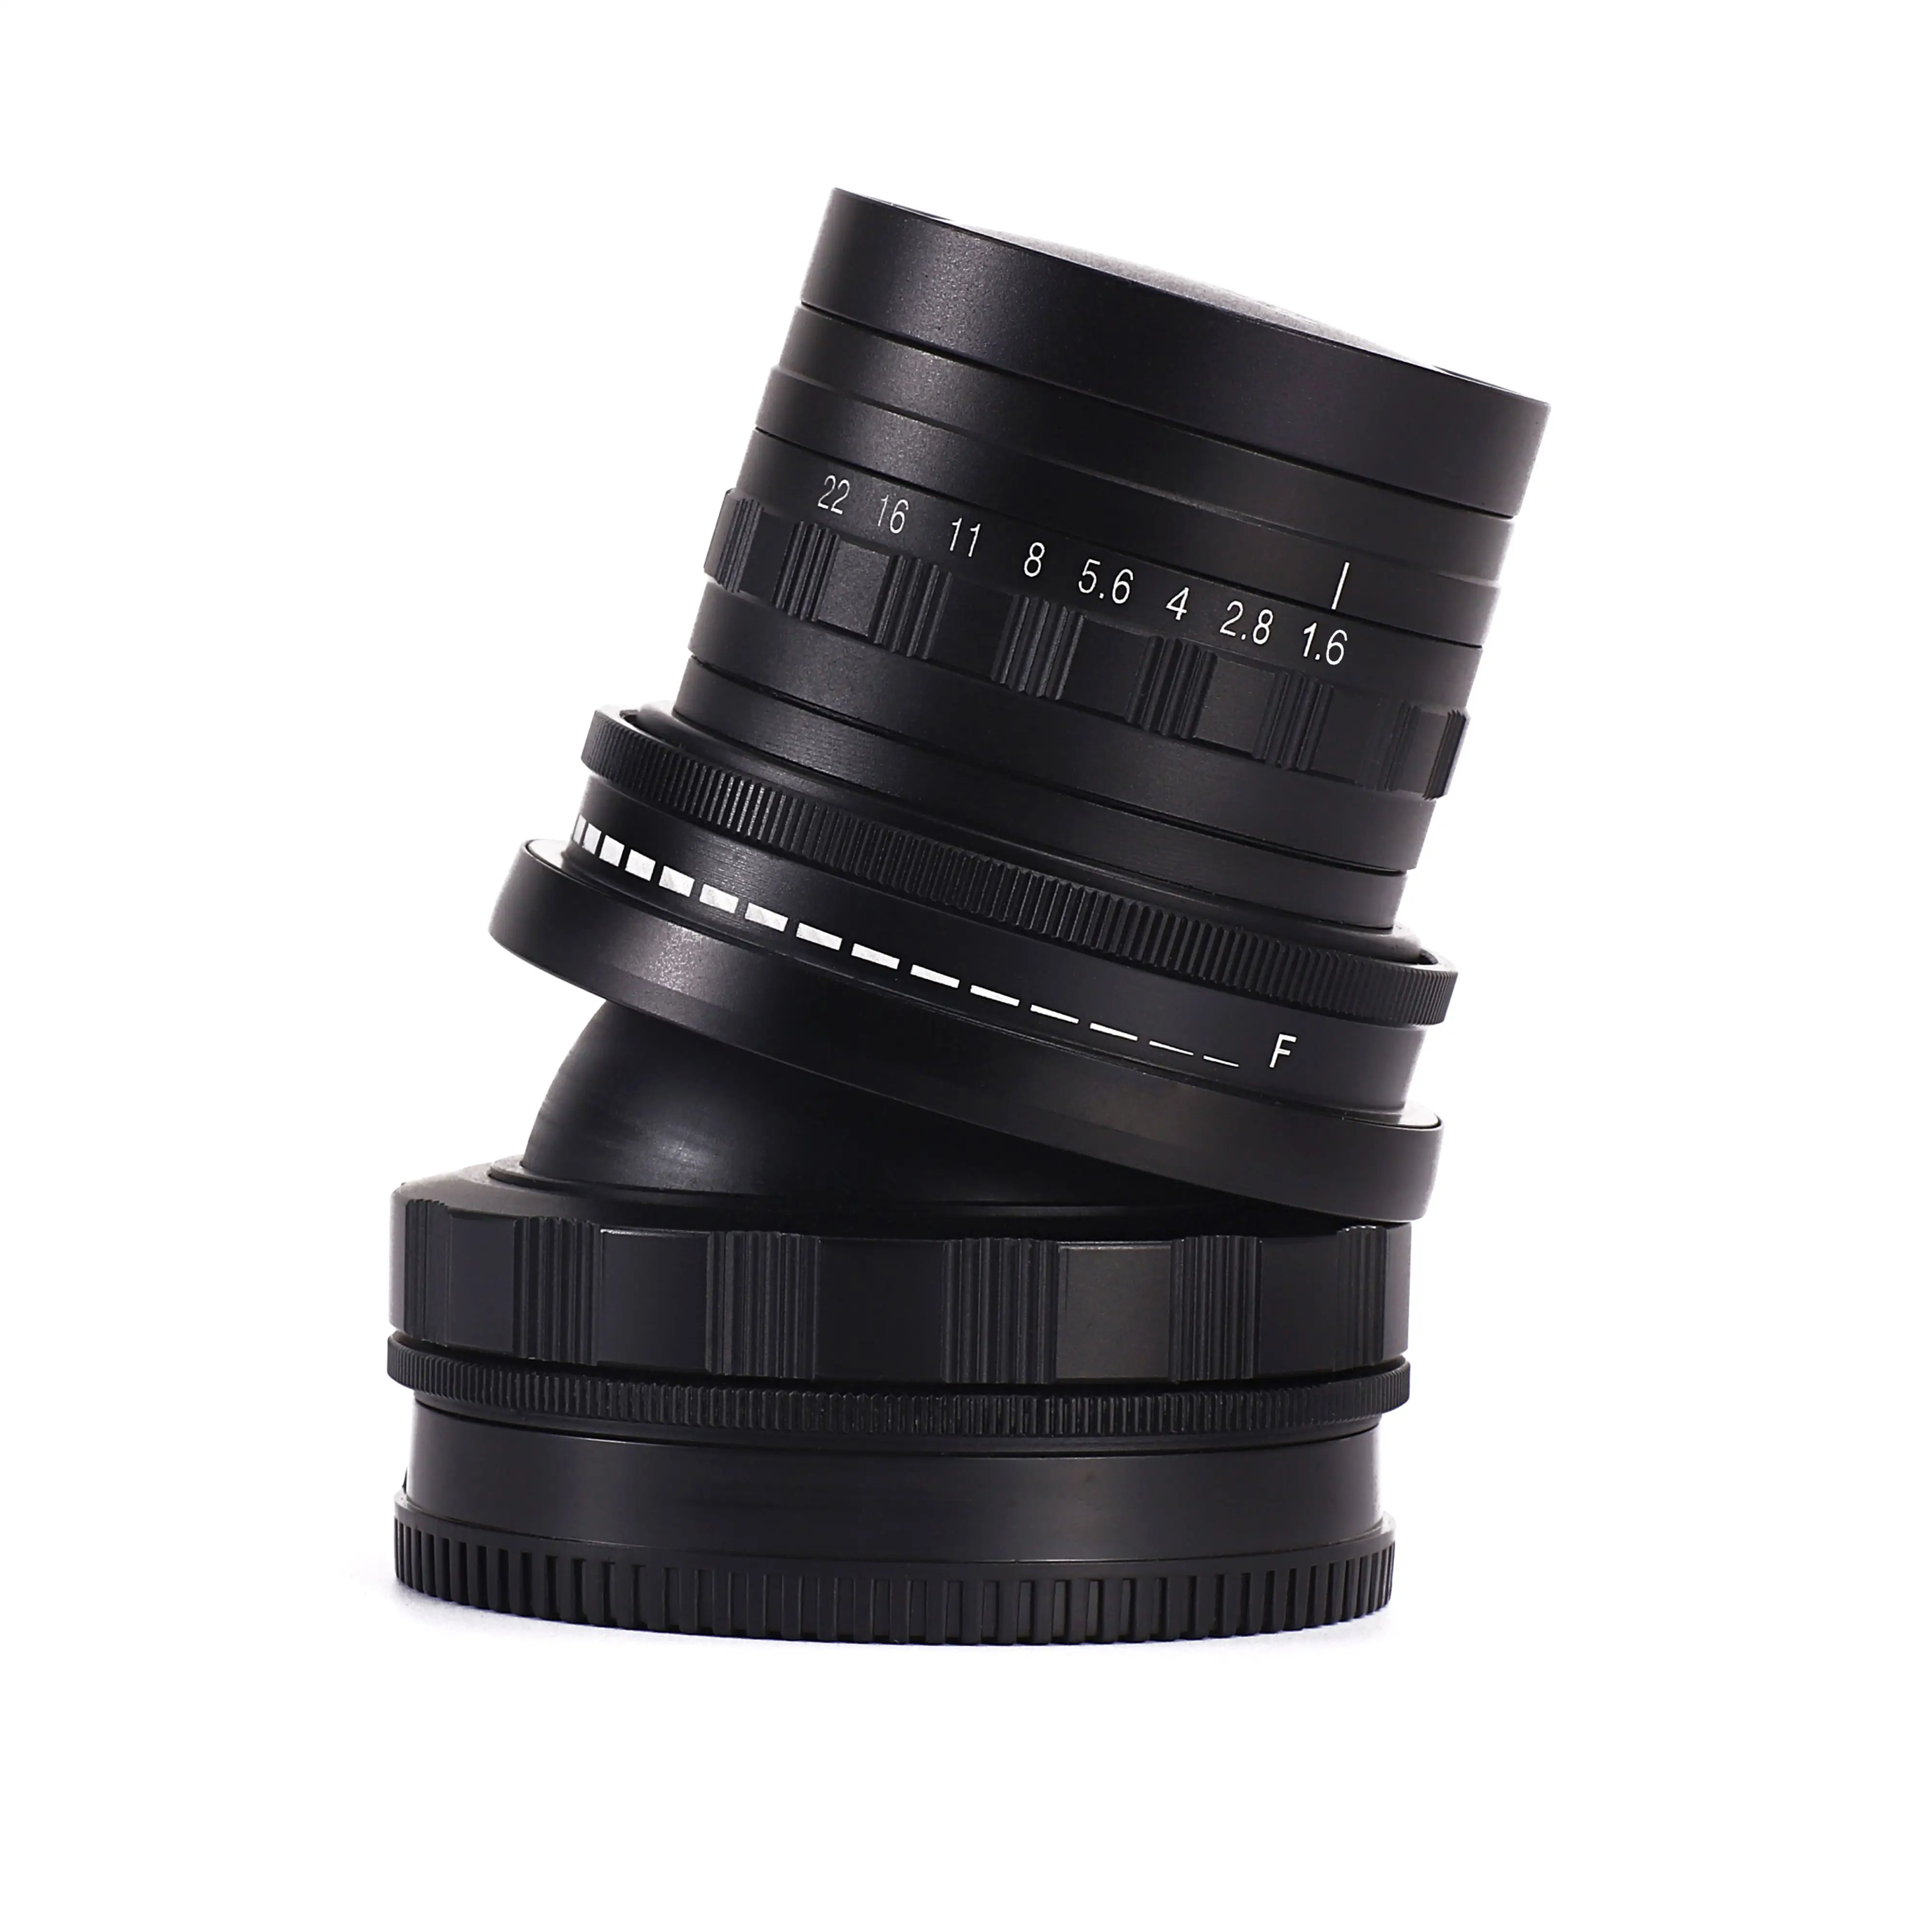 F1.6 50Mm Tilt Shift Lens Mirrorless tam çerçeve dijital kamera Lens için Pentax KAF